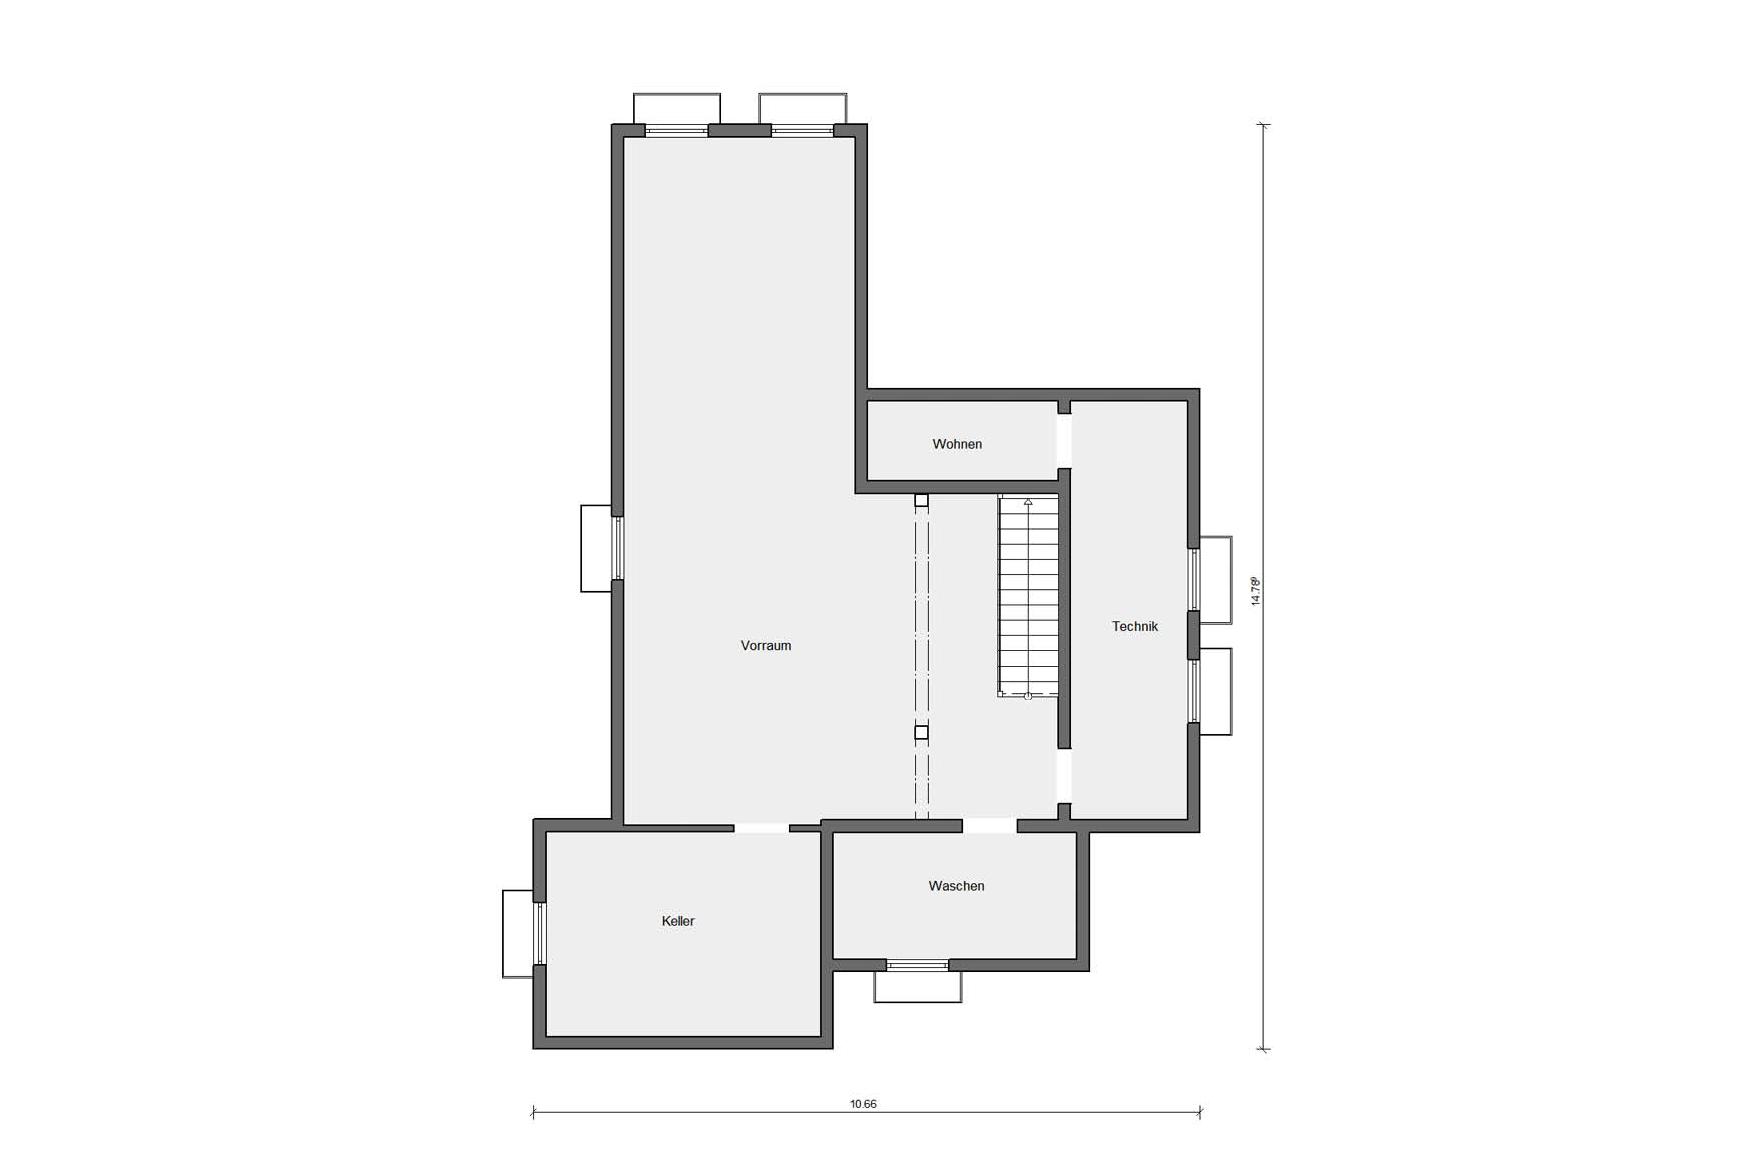 Plano del sótano casa de estilo Bauhaus con techo plano E 20-207.1